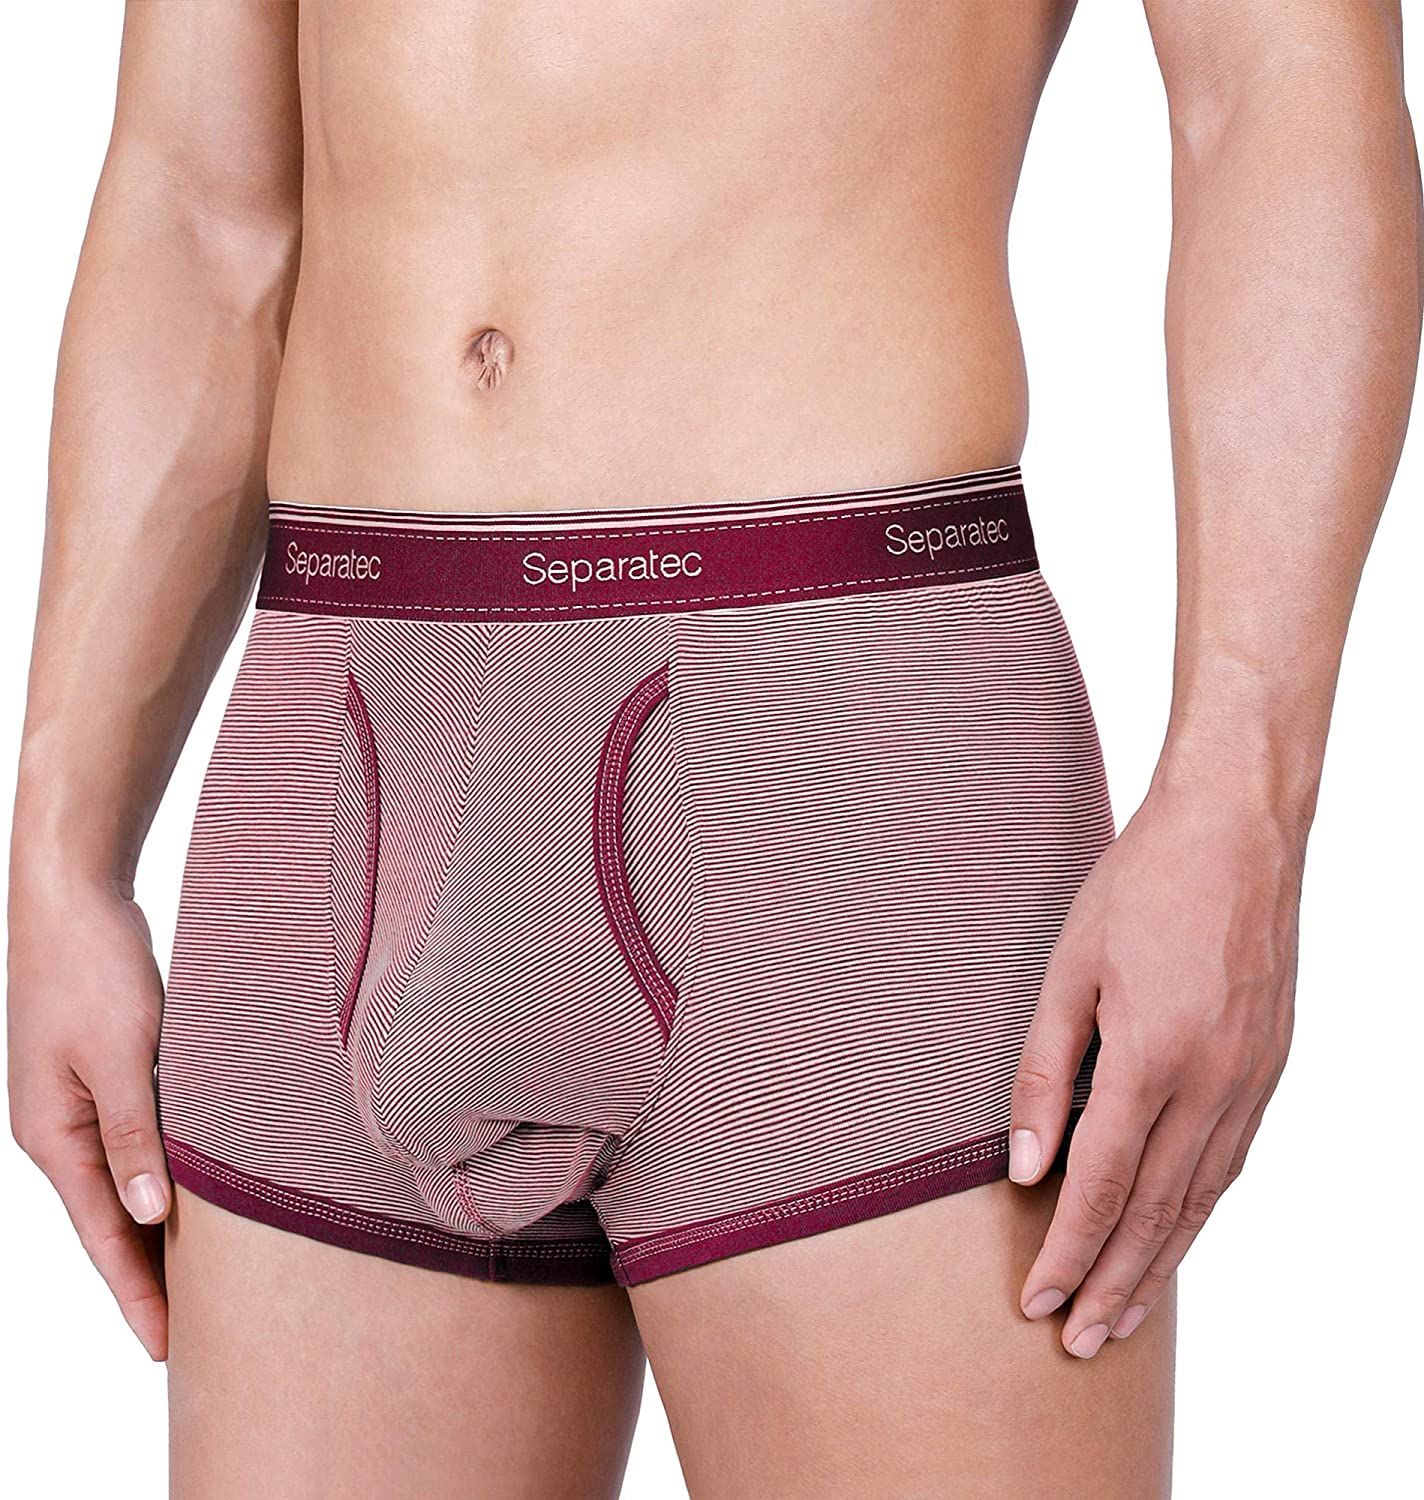 Separatec Men S Underwear Colorful Comfortable Soft Cotton Stretch